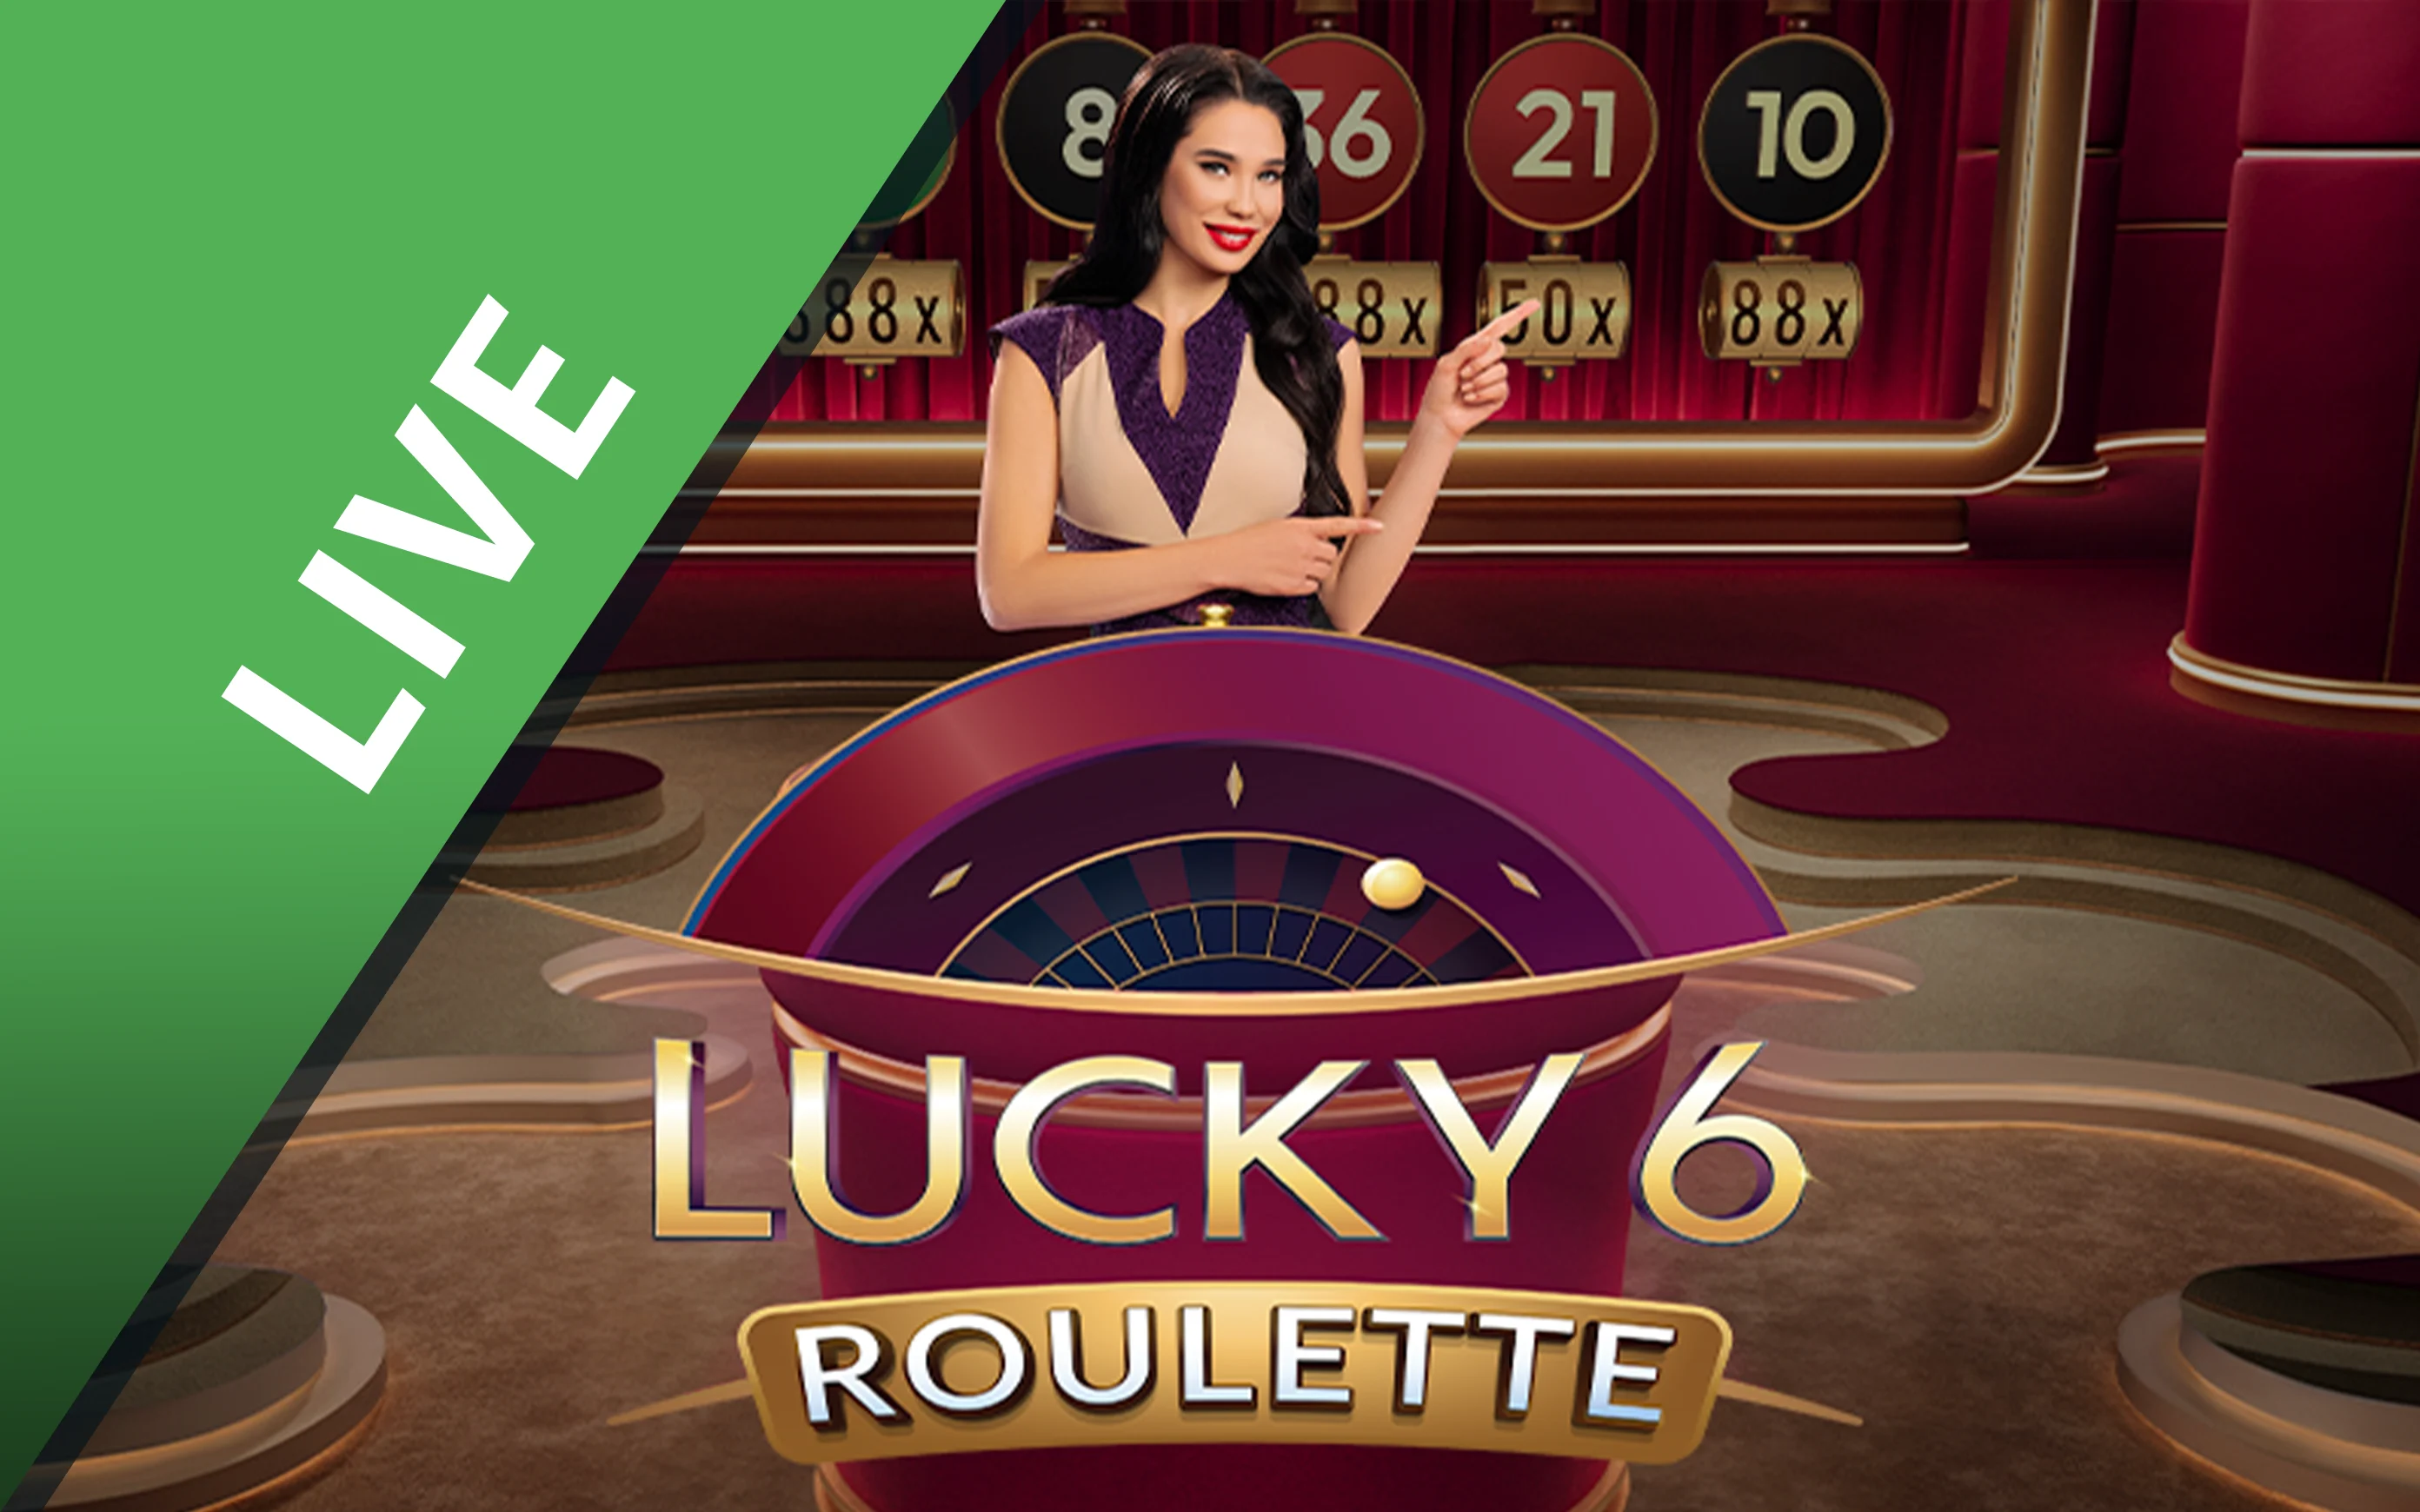 Juega a Lucky 6 Roulette™ en el casino en línea de Starcasino.be